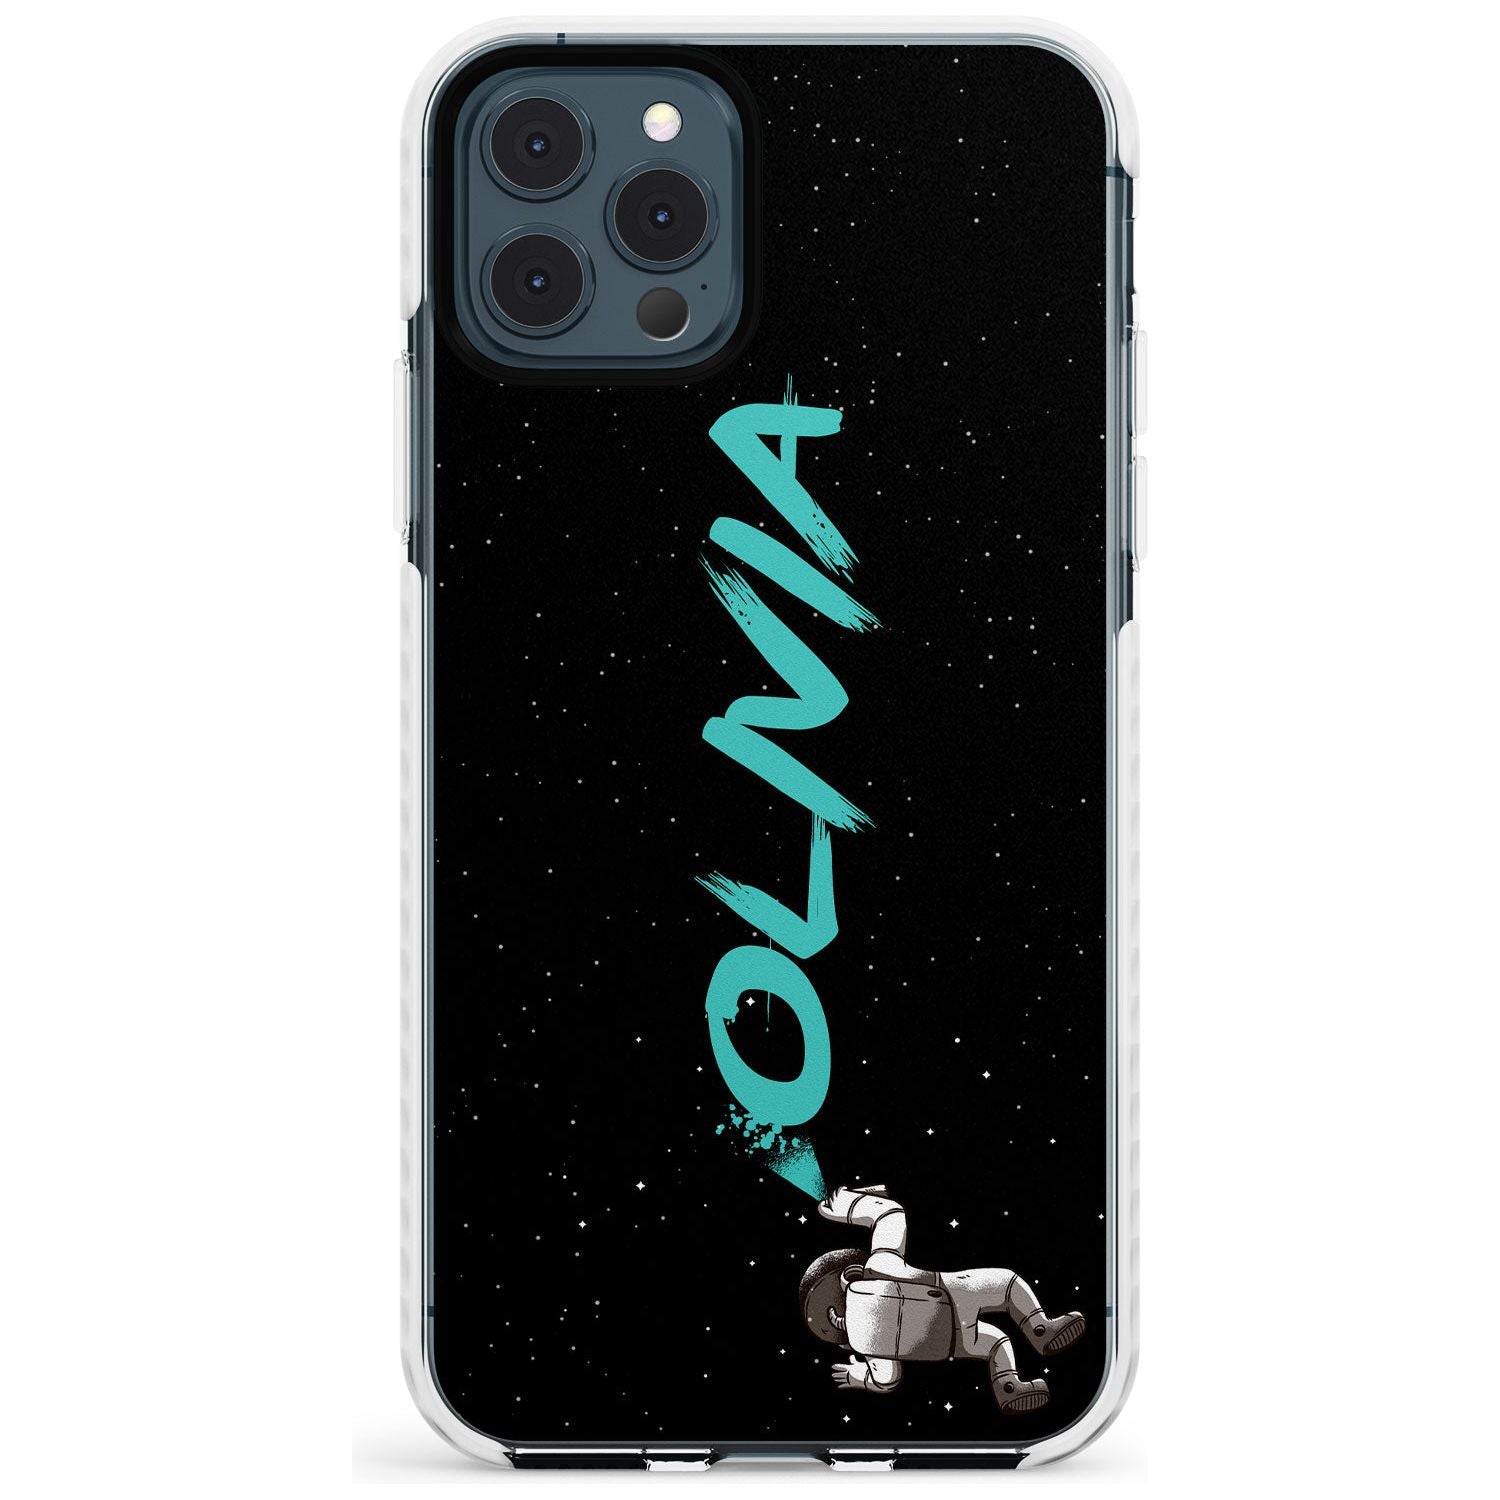 Graffiti Astronaut Slim TPU Phone Case for iPhone 11 Pro Max